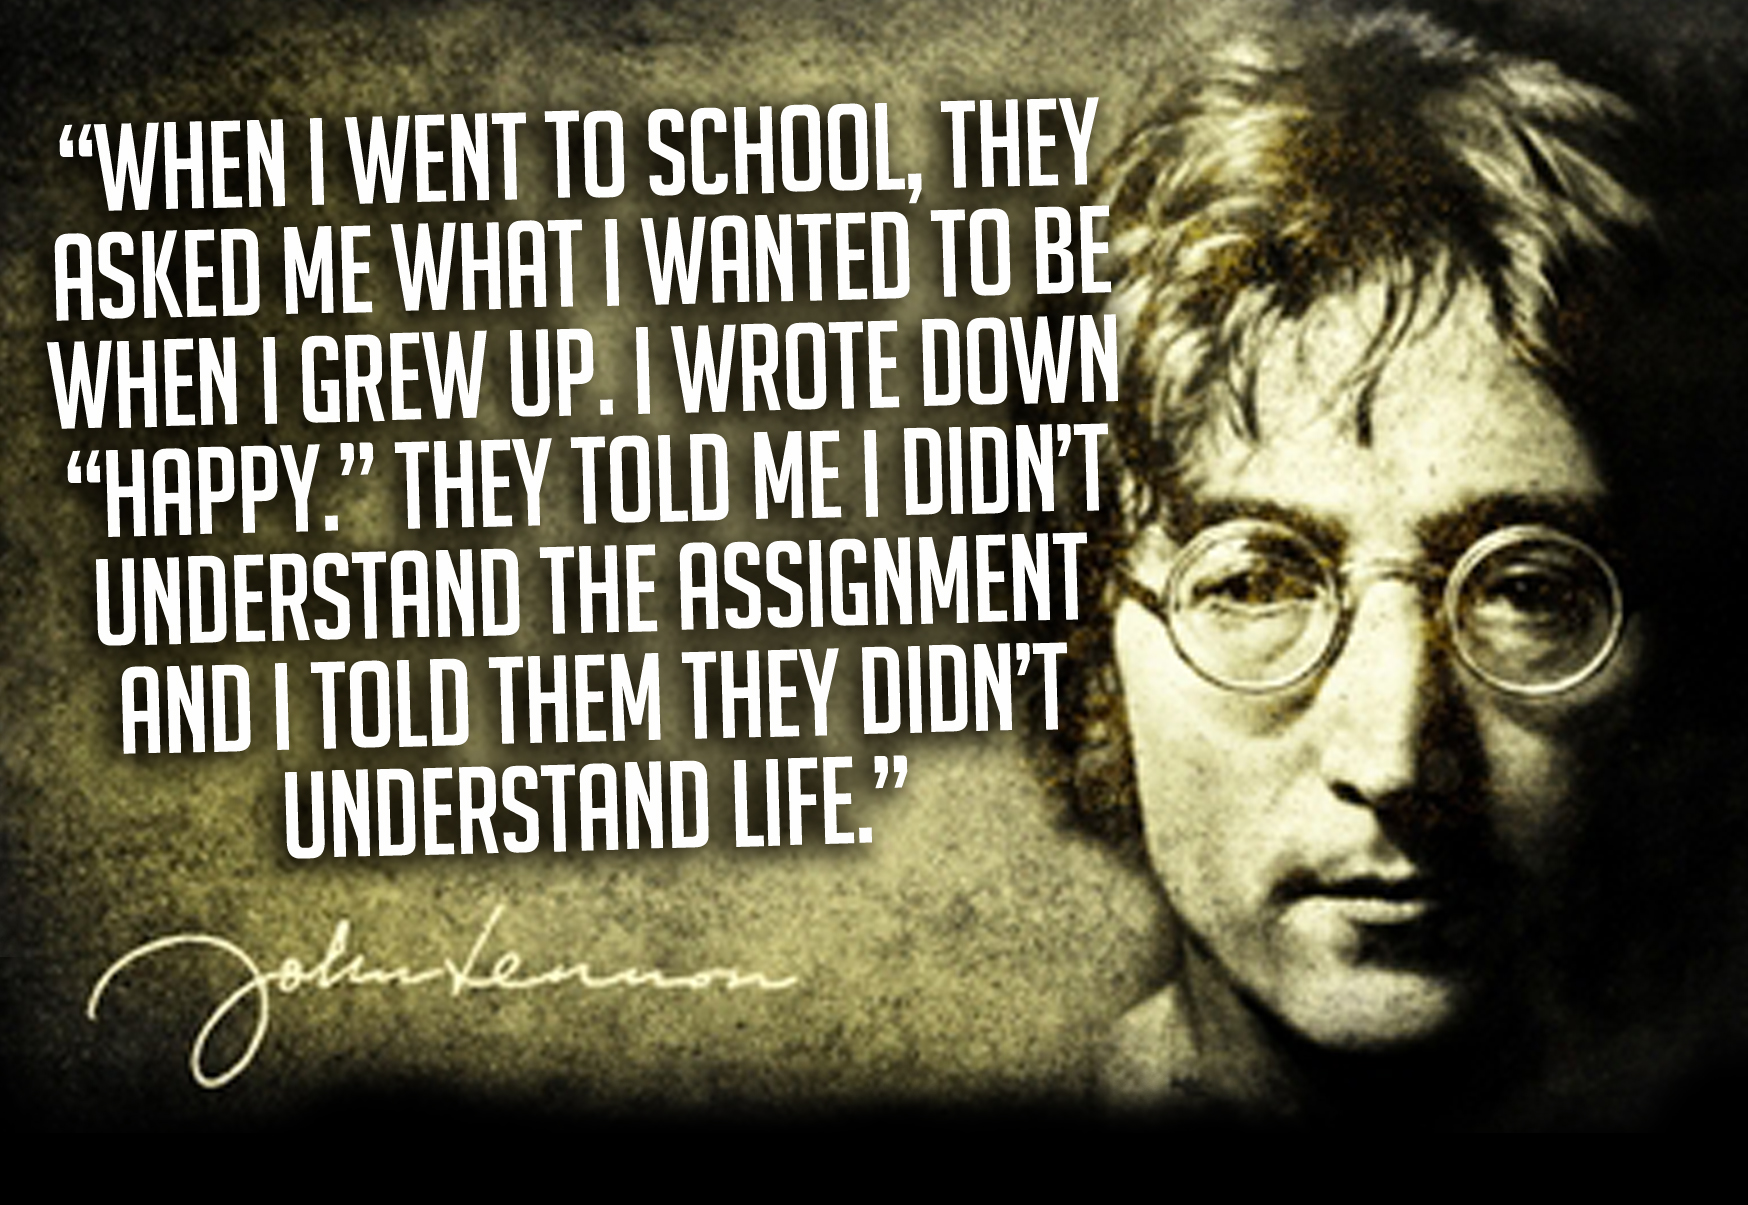 John Lennon quote #2